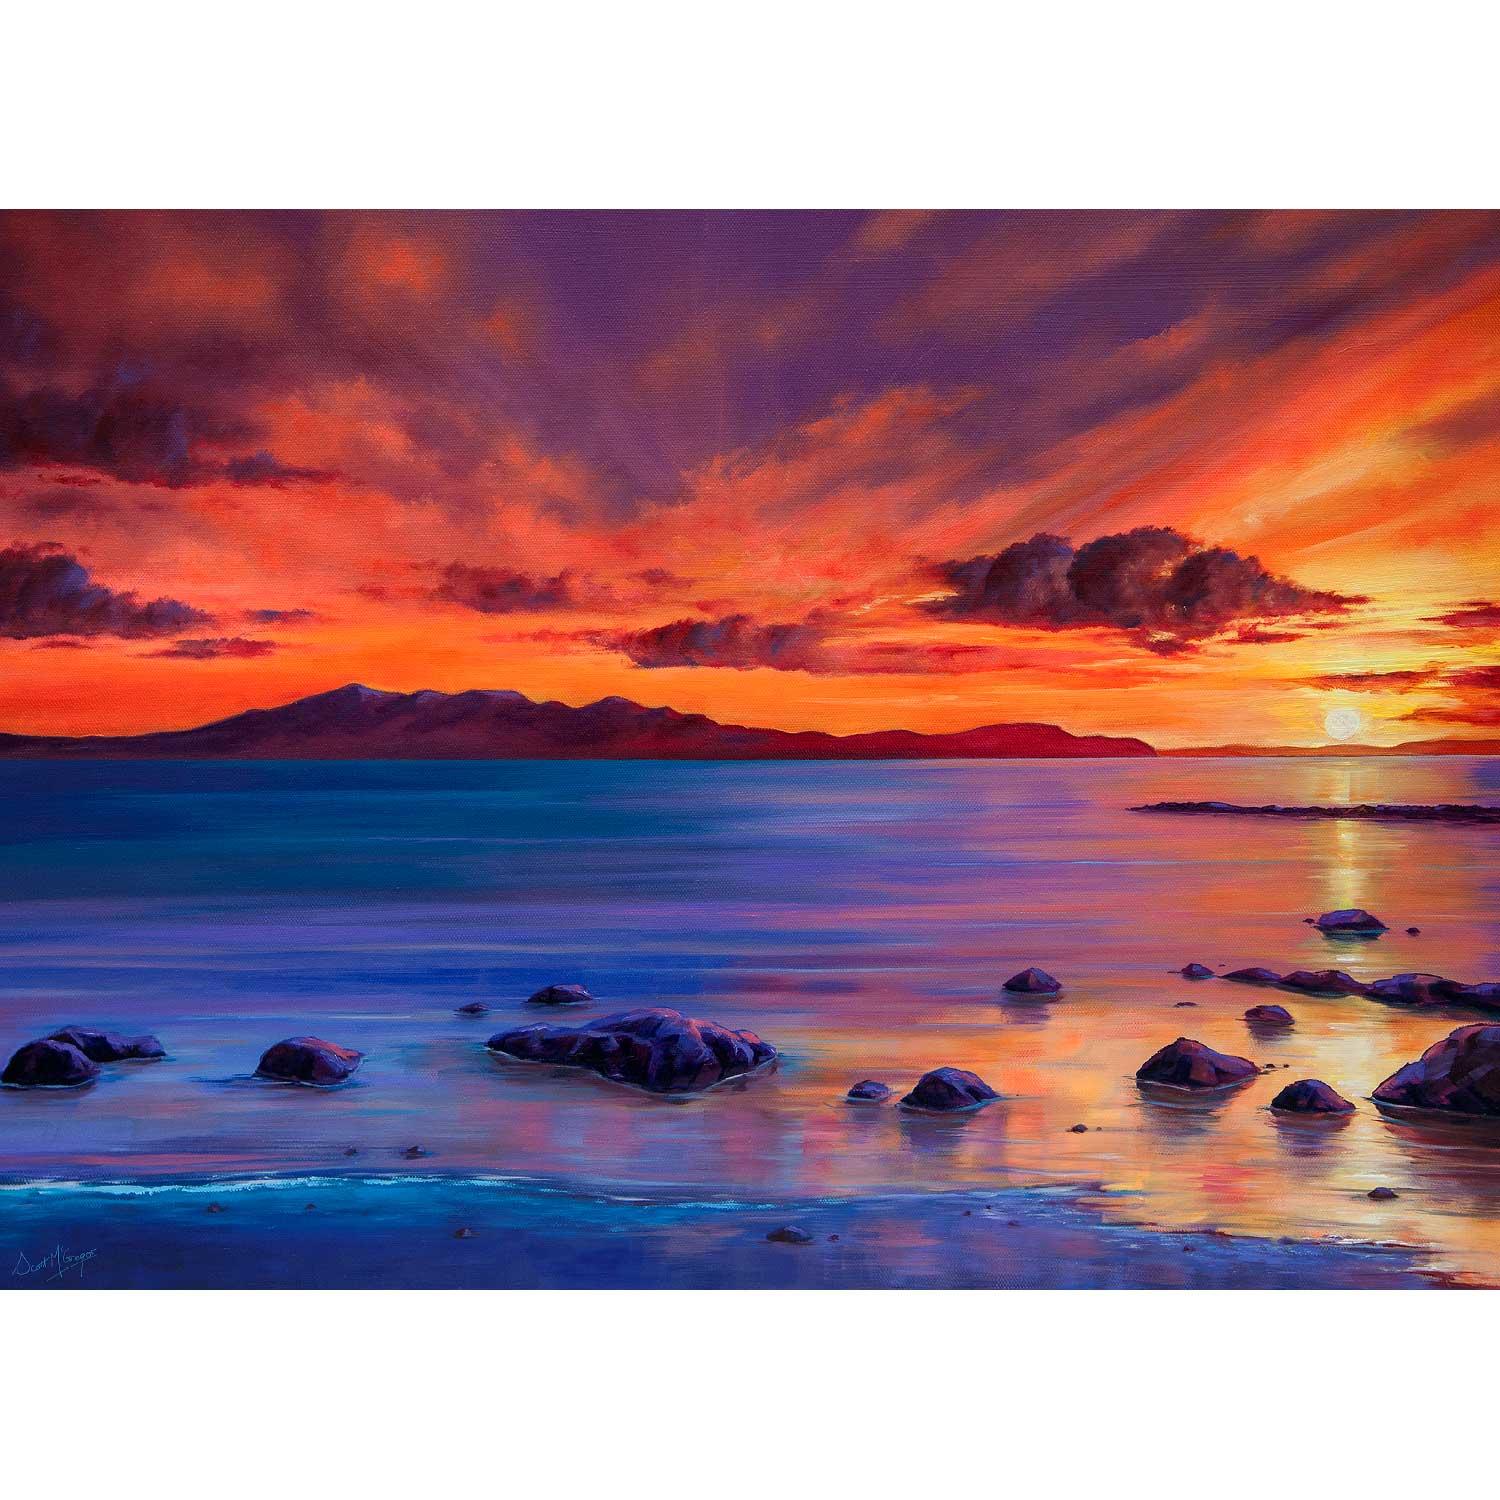 Arran Sunset by Scott McGregor